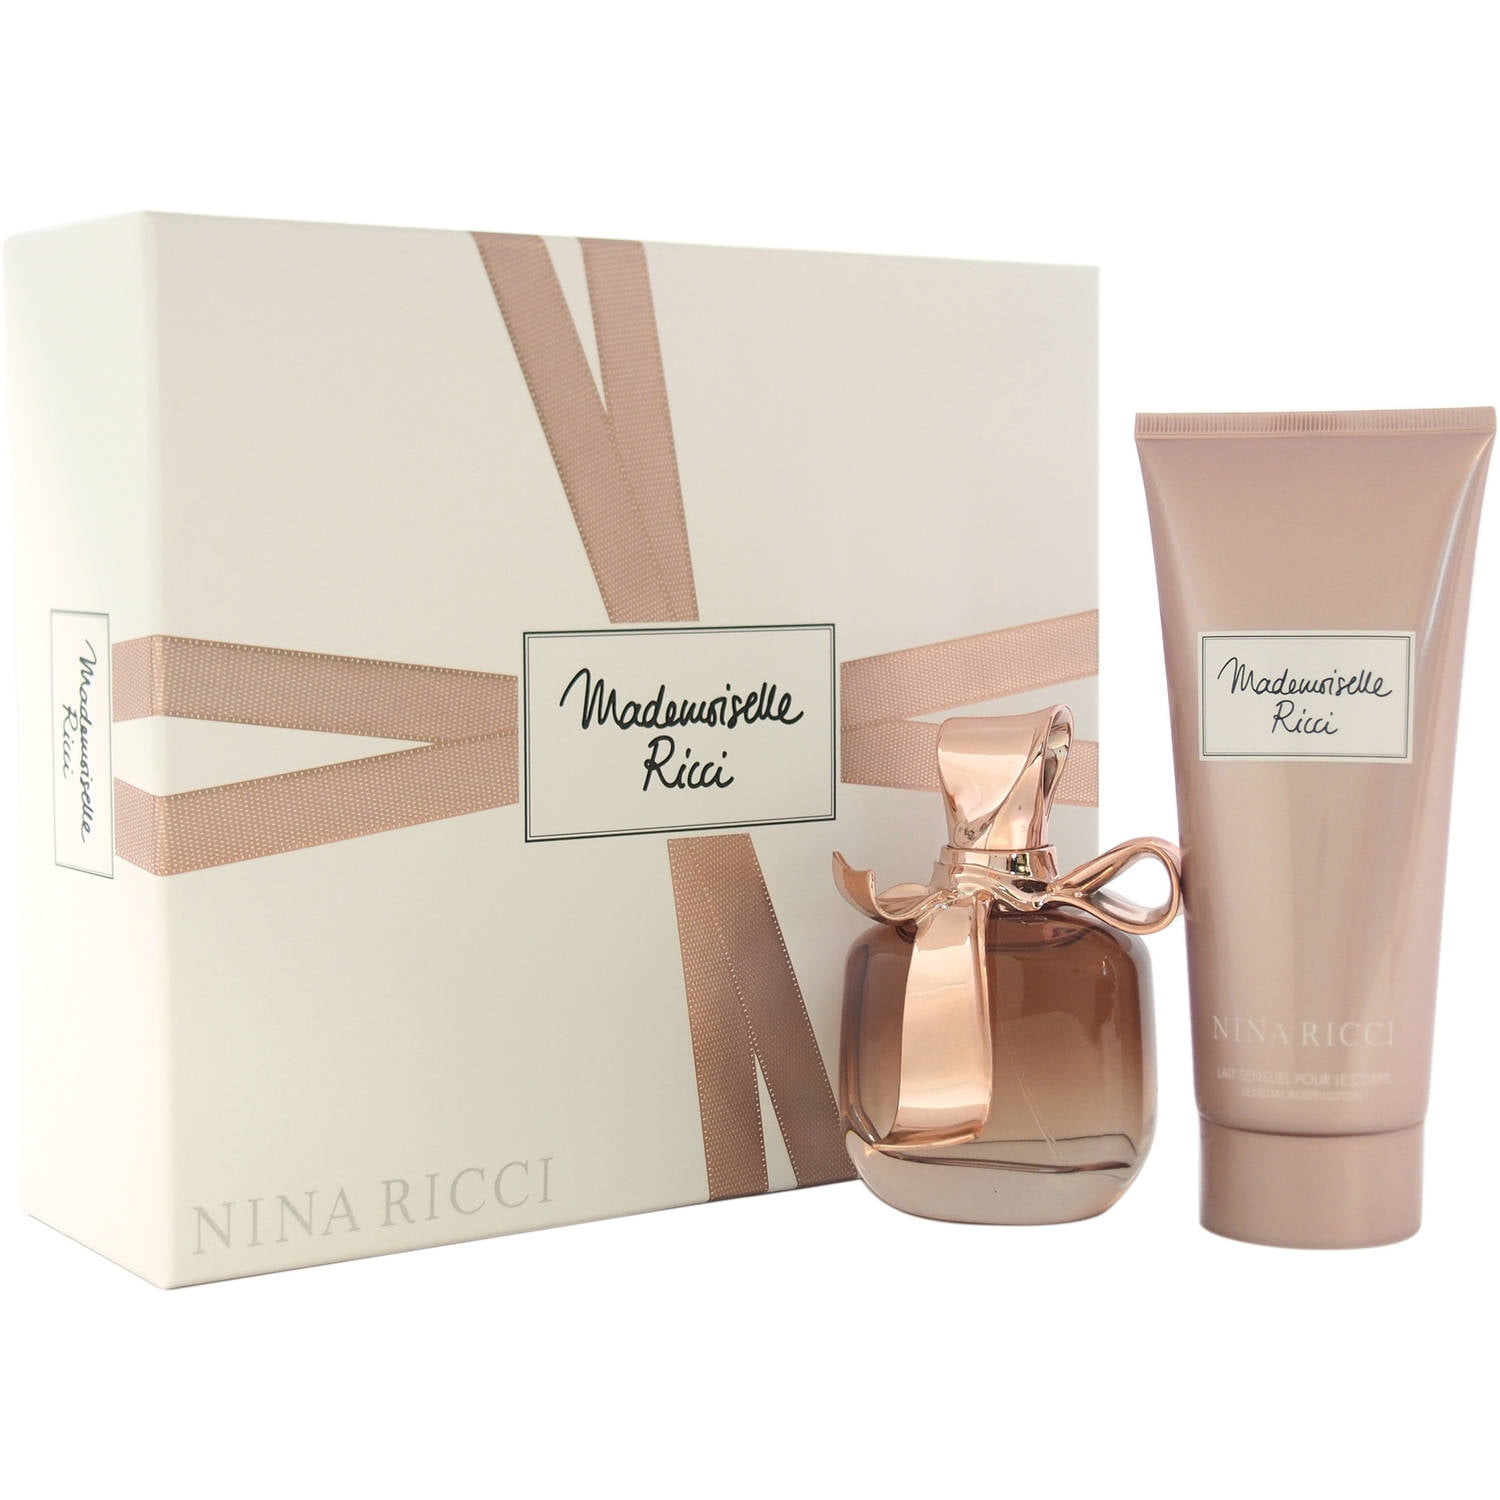 Nina Ricci - Nina Ricci Mademoiselle Ricci Gift Set, 2 pc - Walmart.com ...